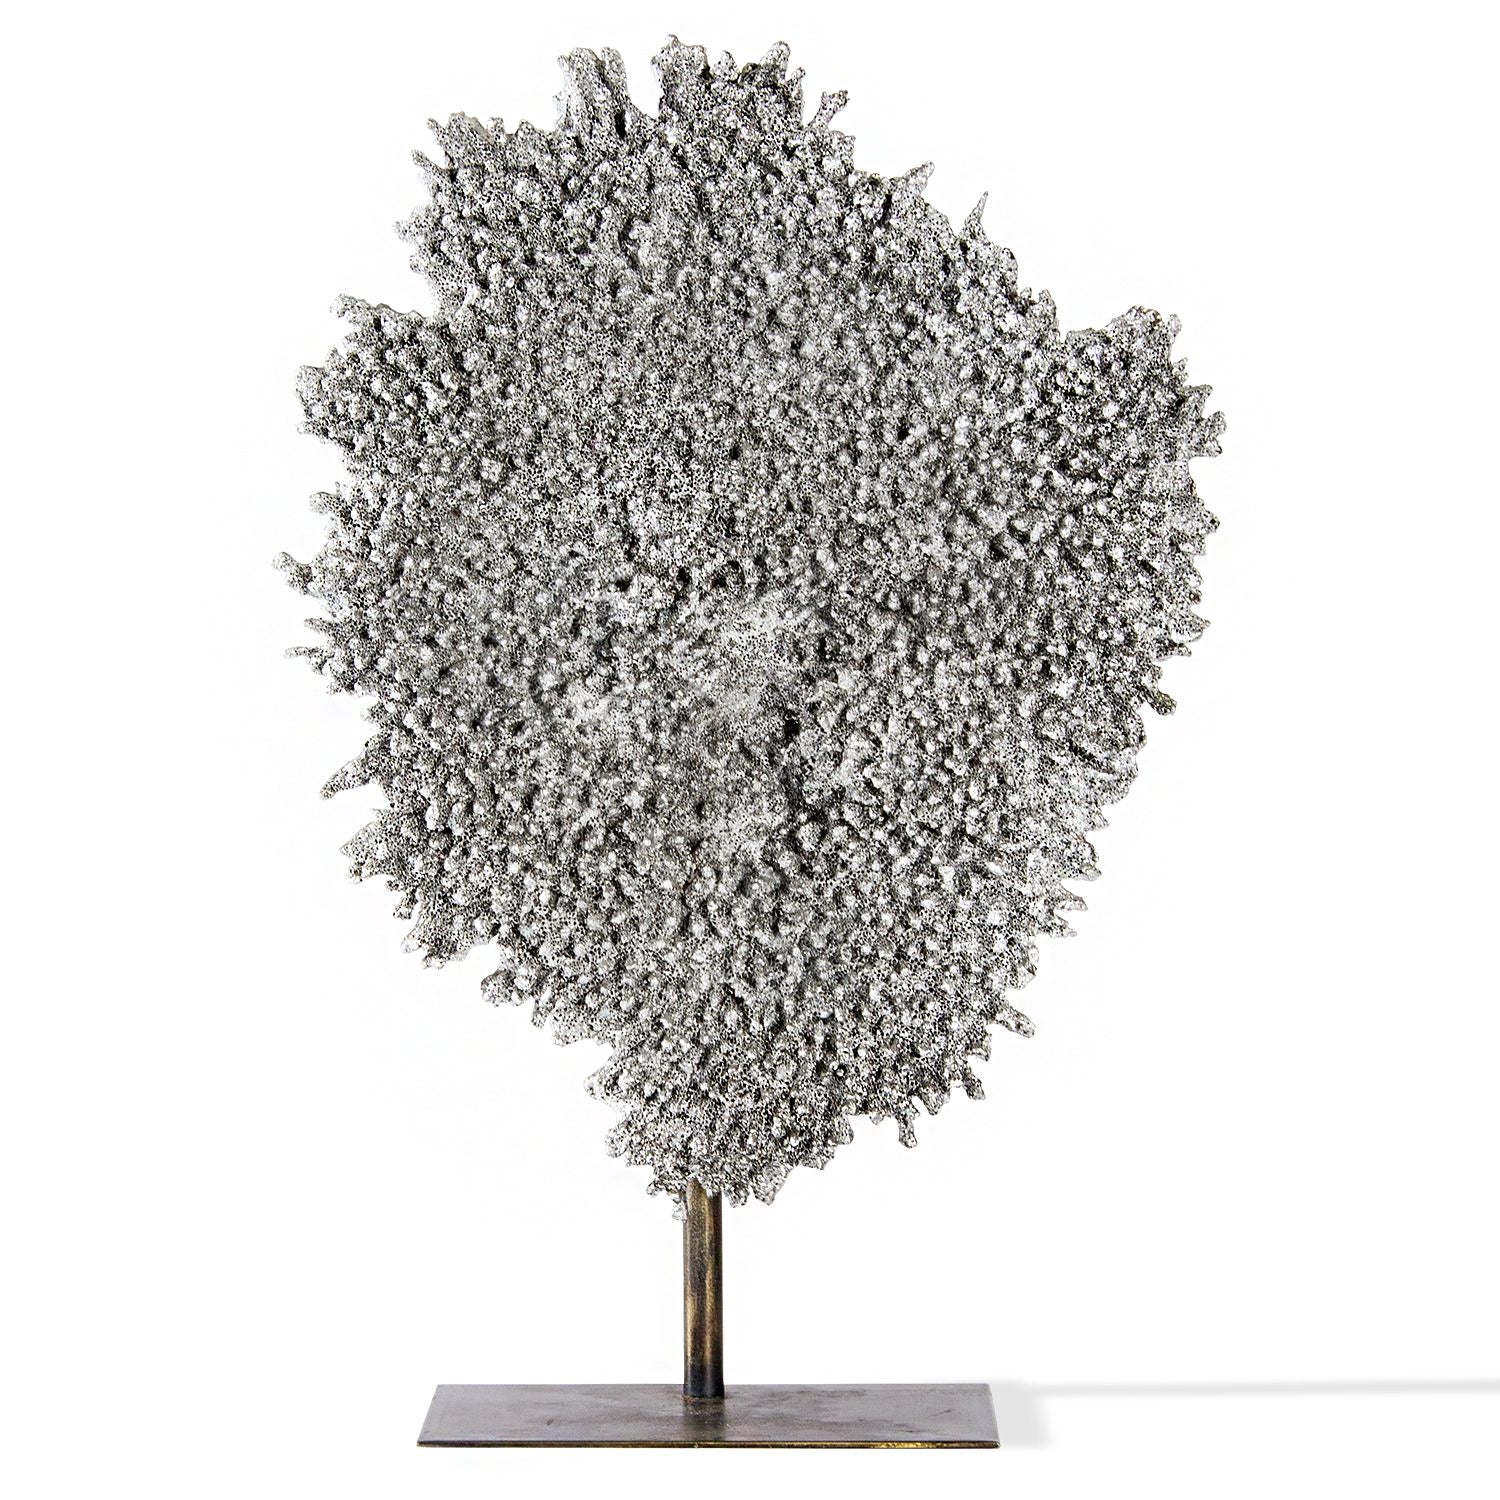 Coral Silver Sculpture, 21"H